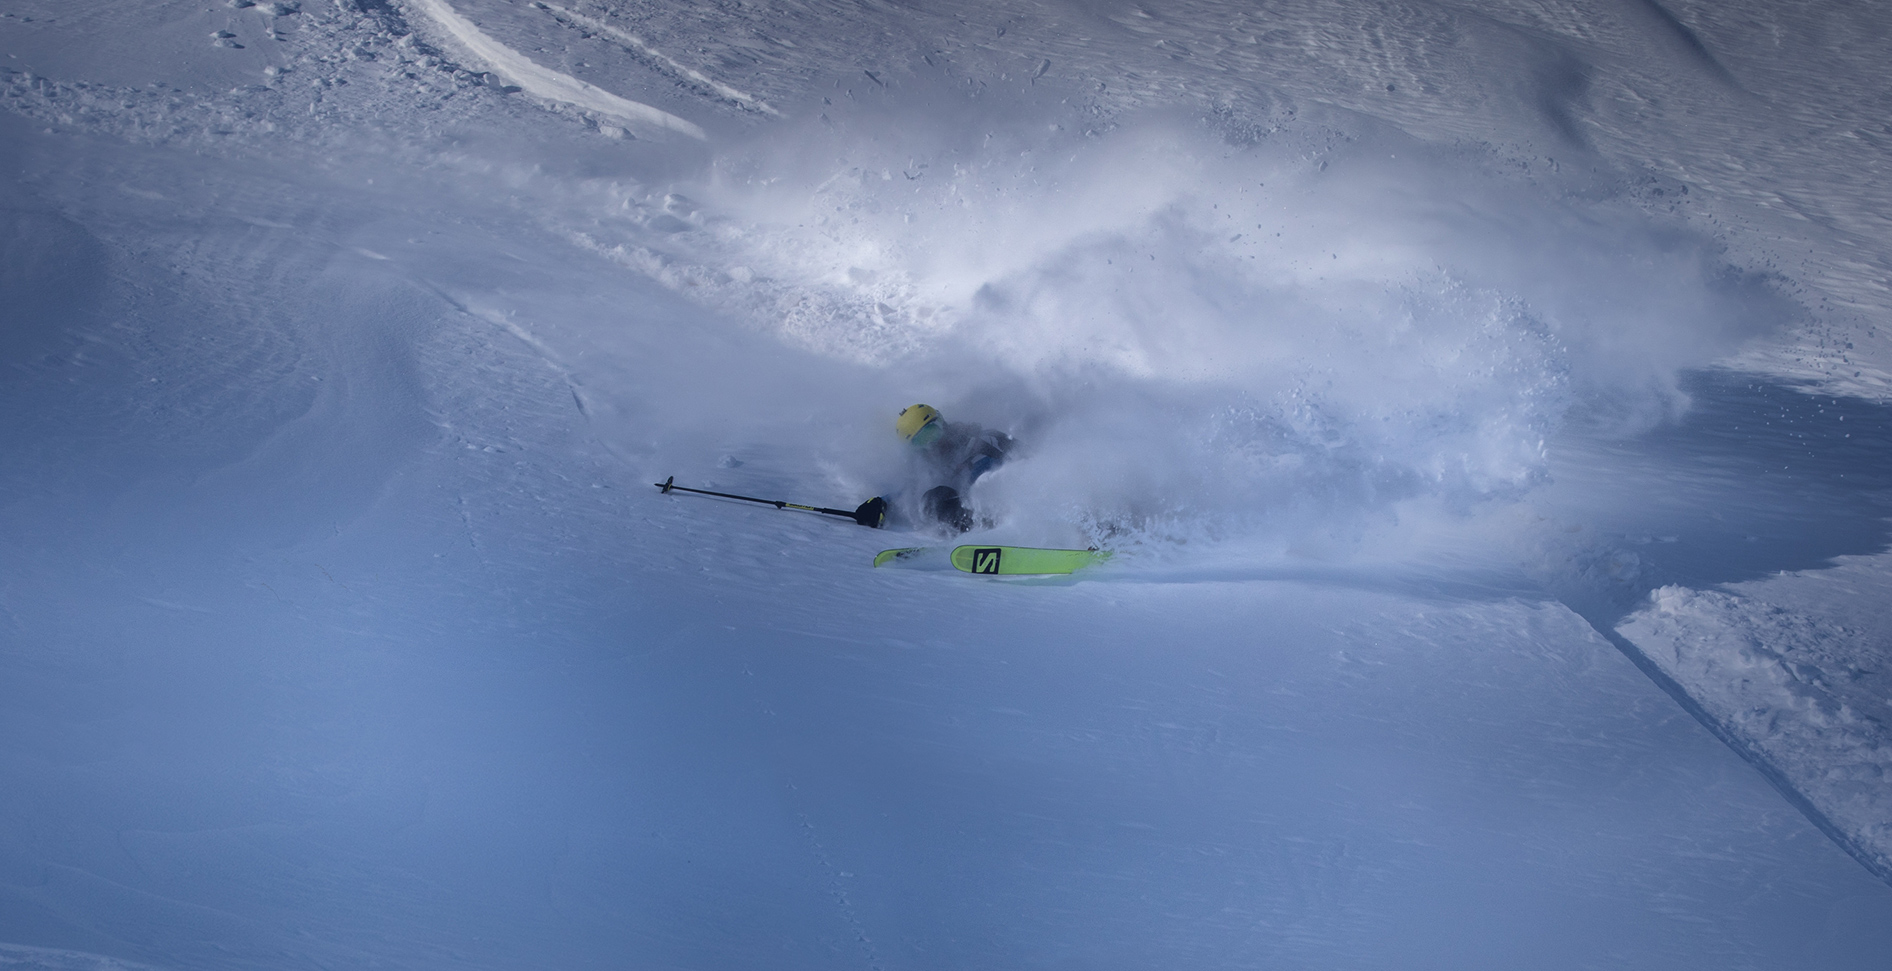 Storm - Máscara para Snowboard/Esquí para Hombre